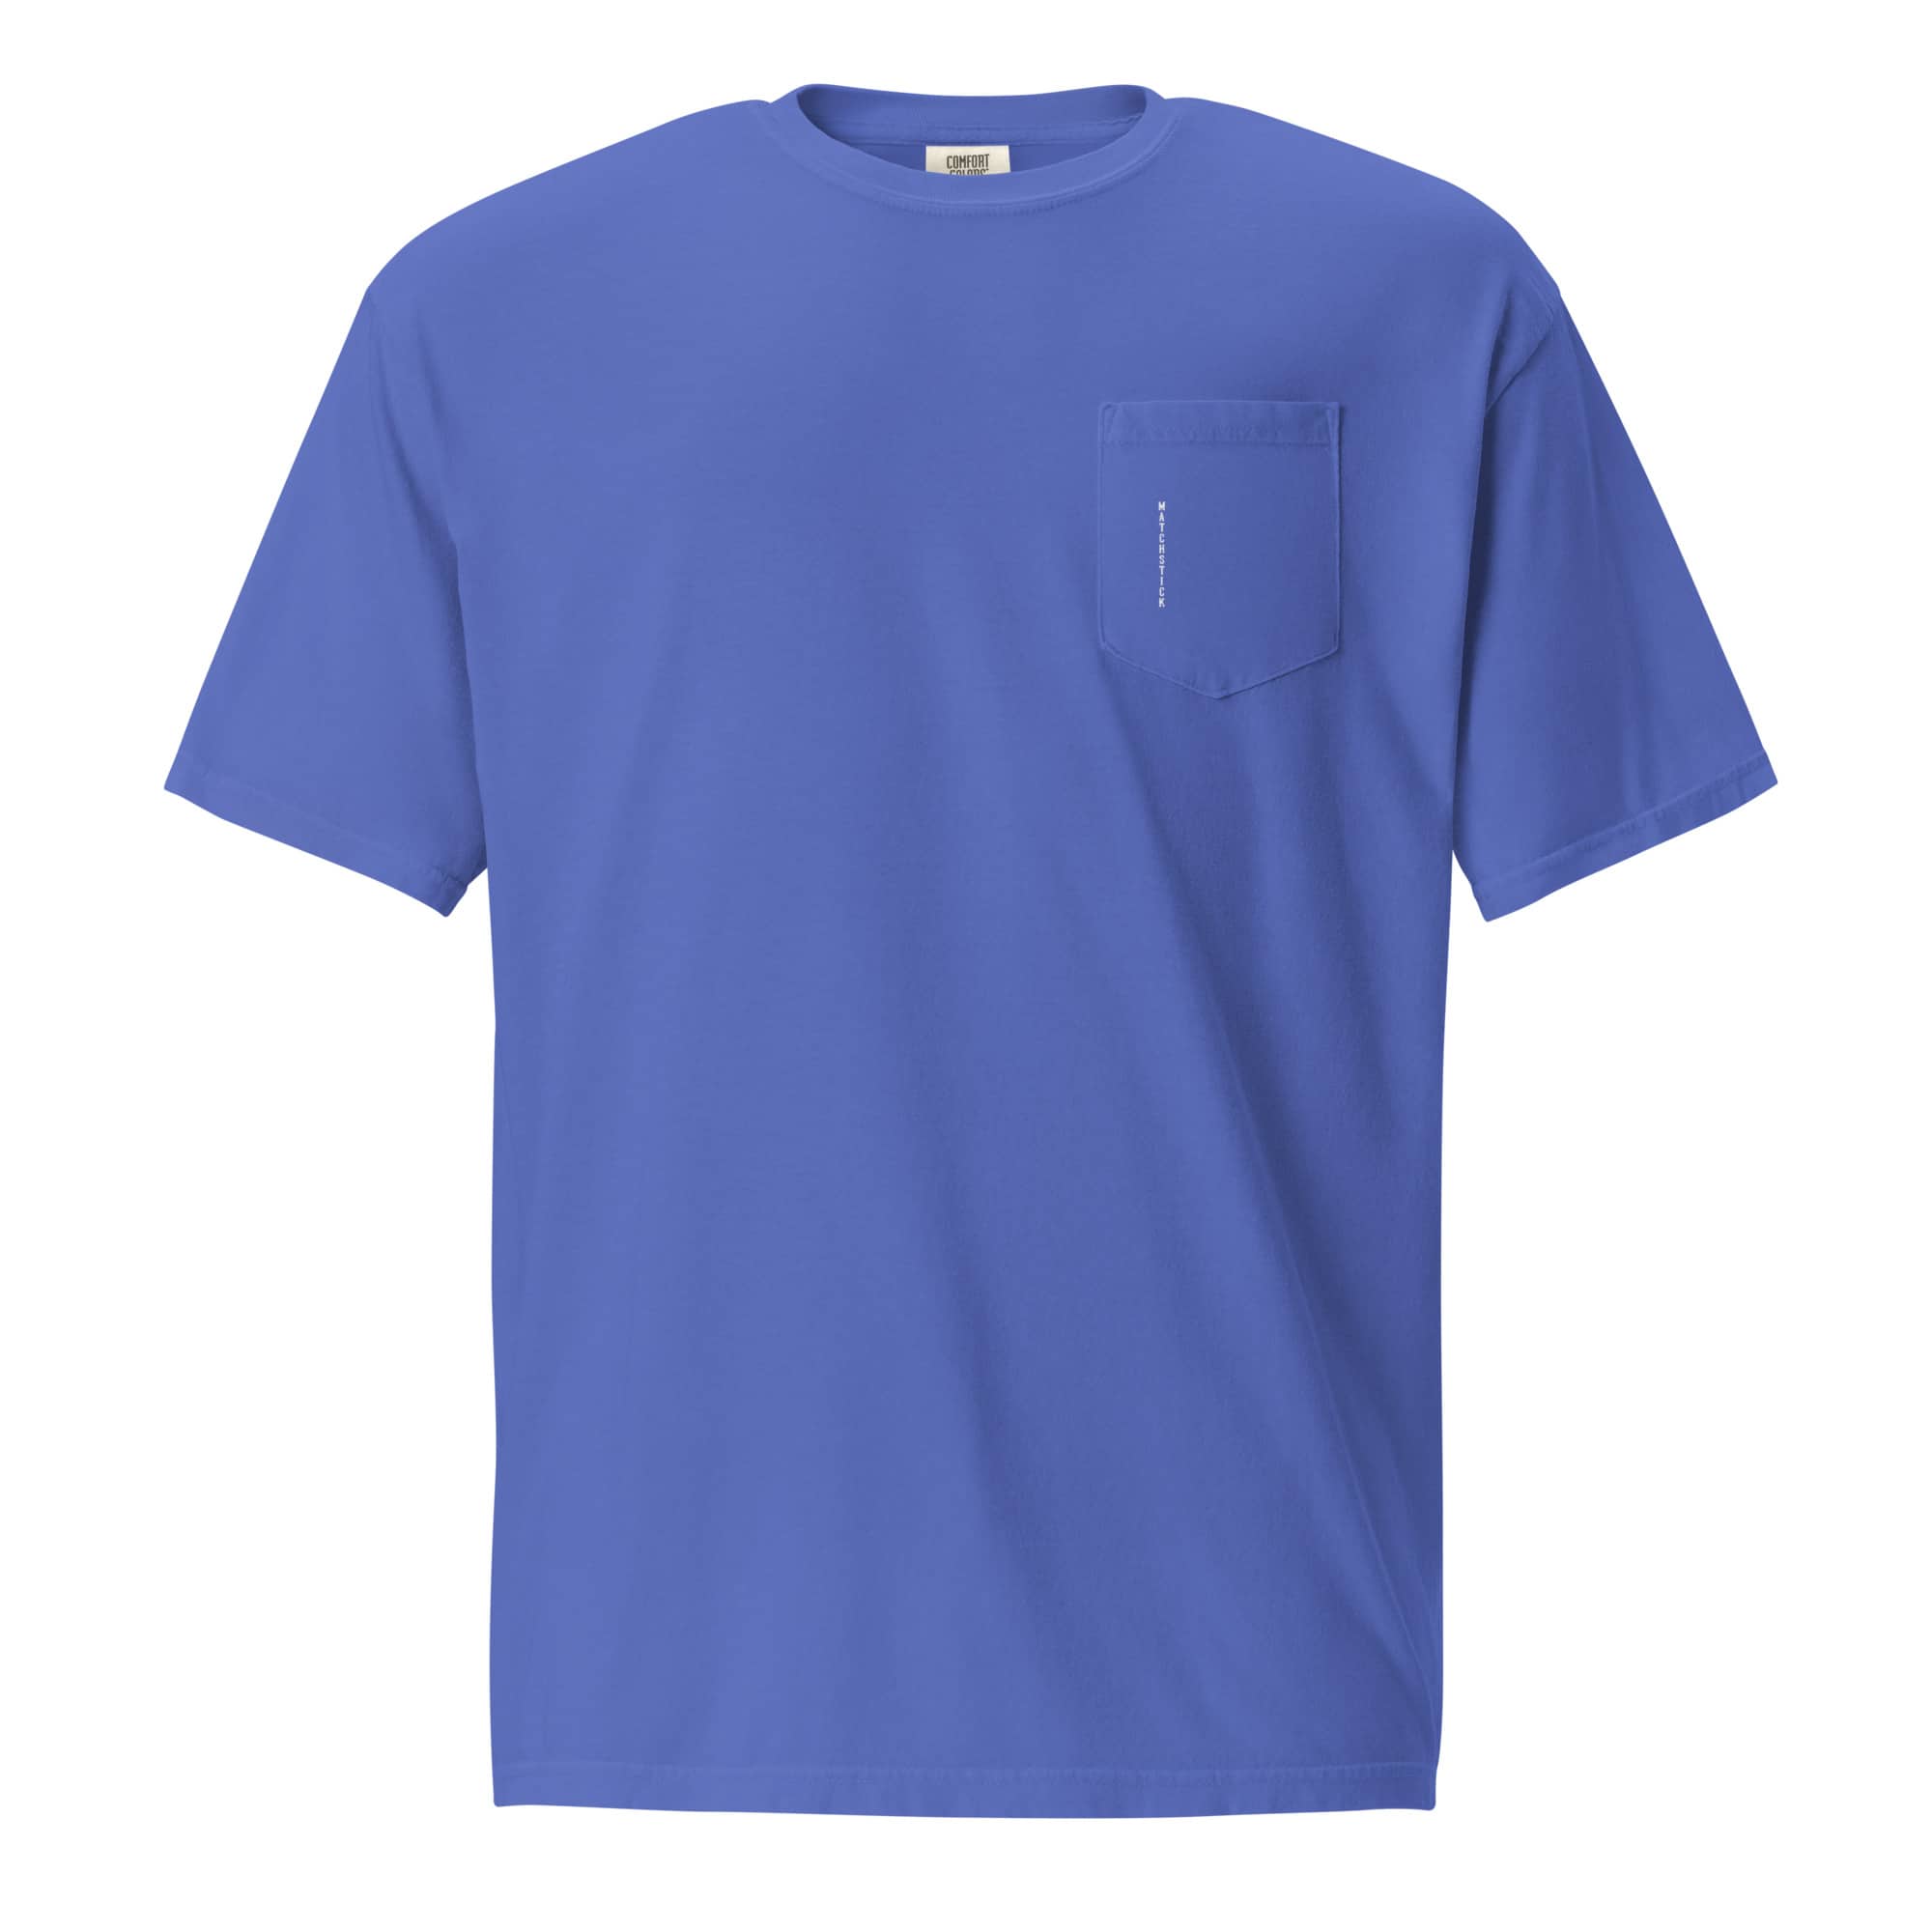 Unisex Short Sleeve Crew Neck - Garment Dyed